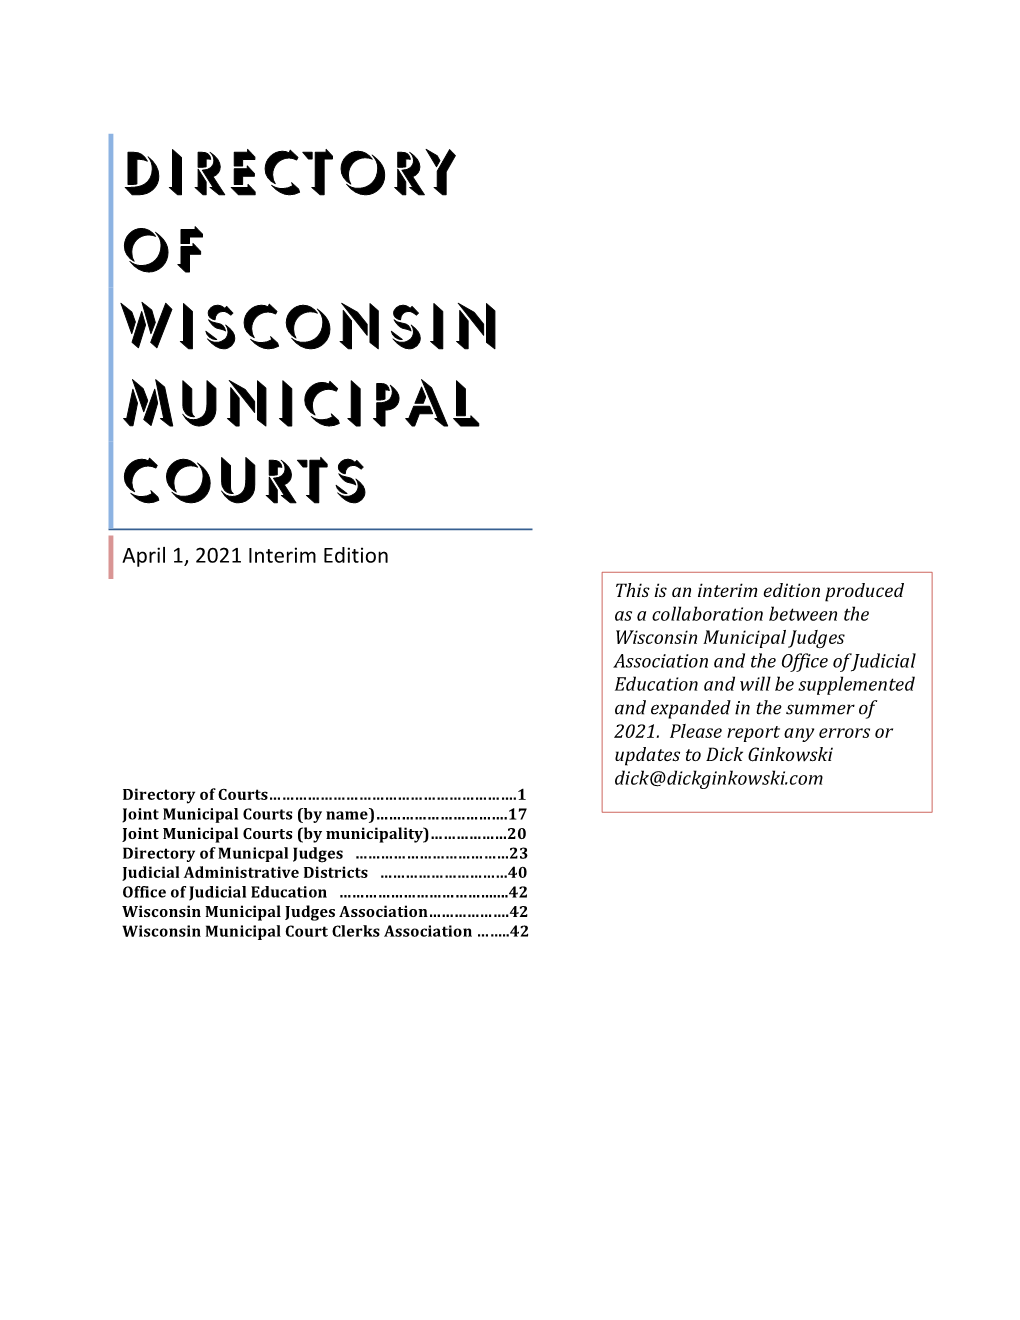 Municipal Court Directory